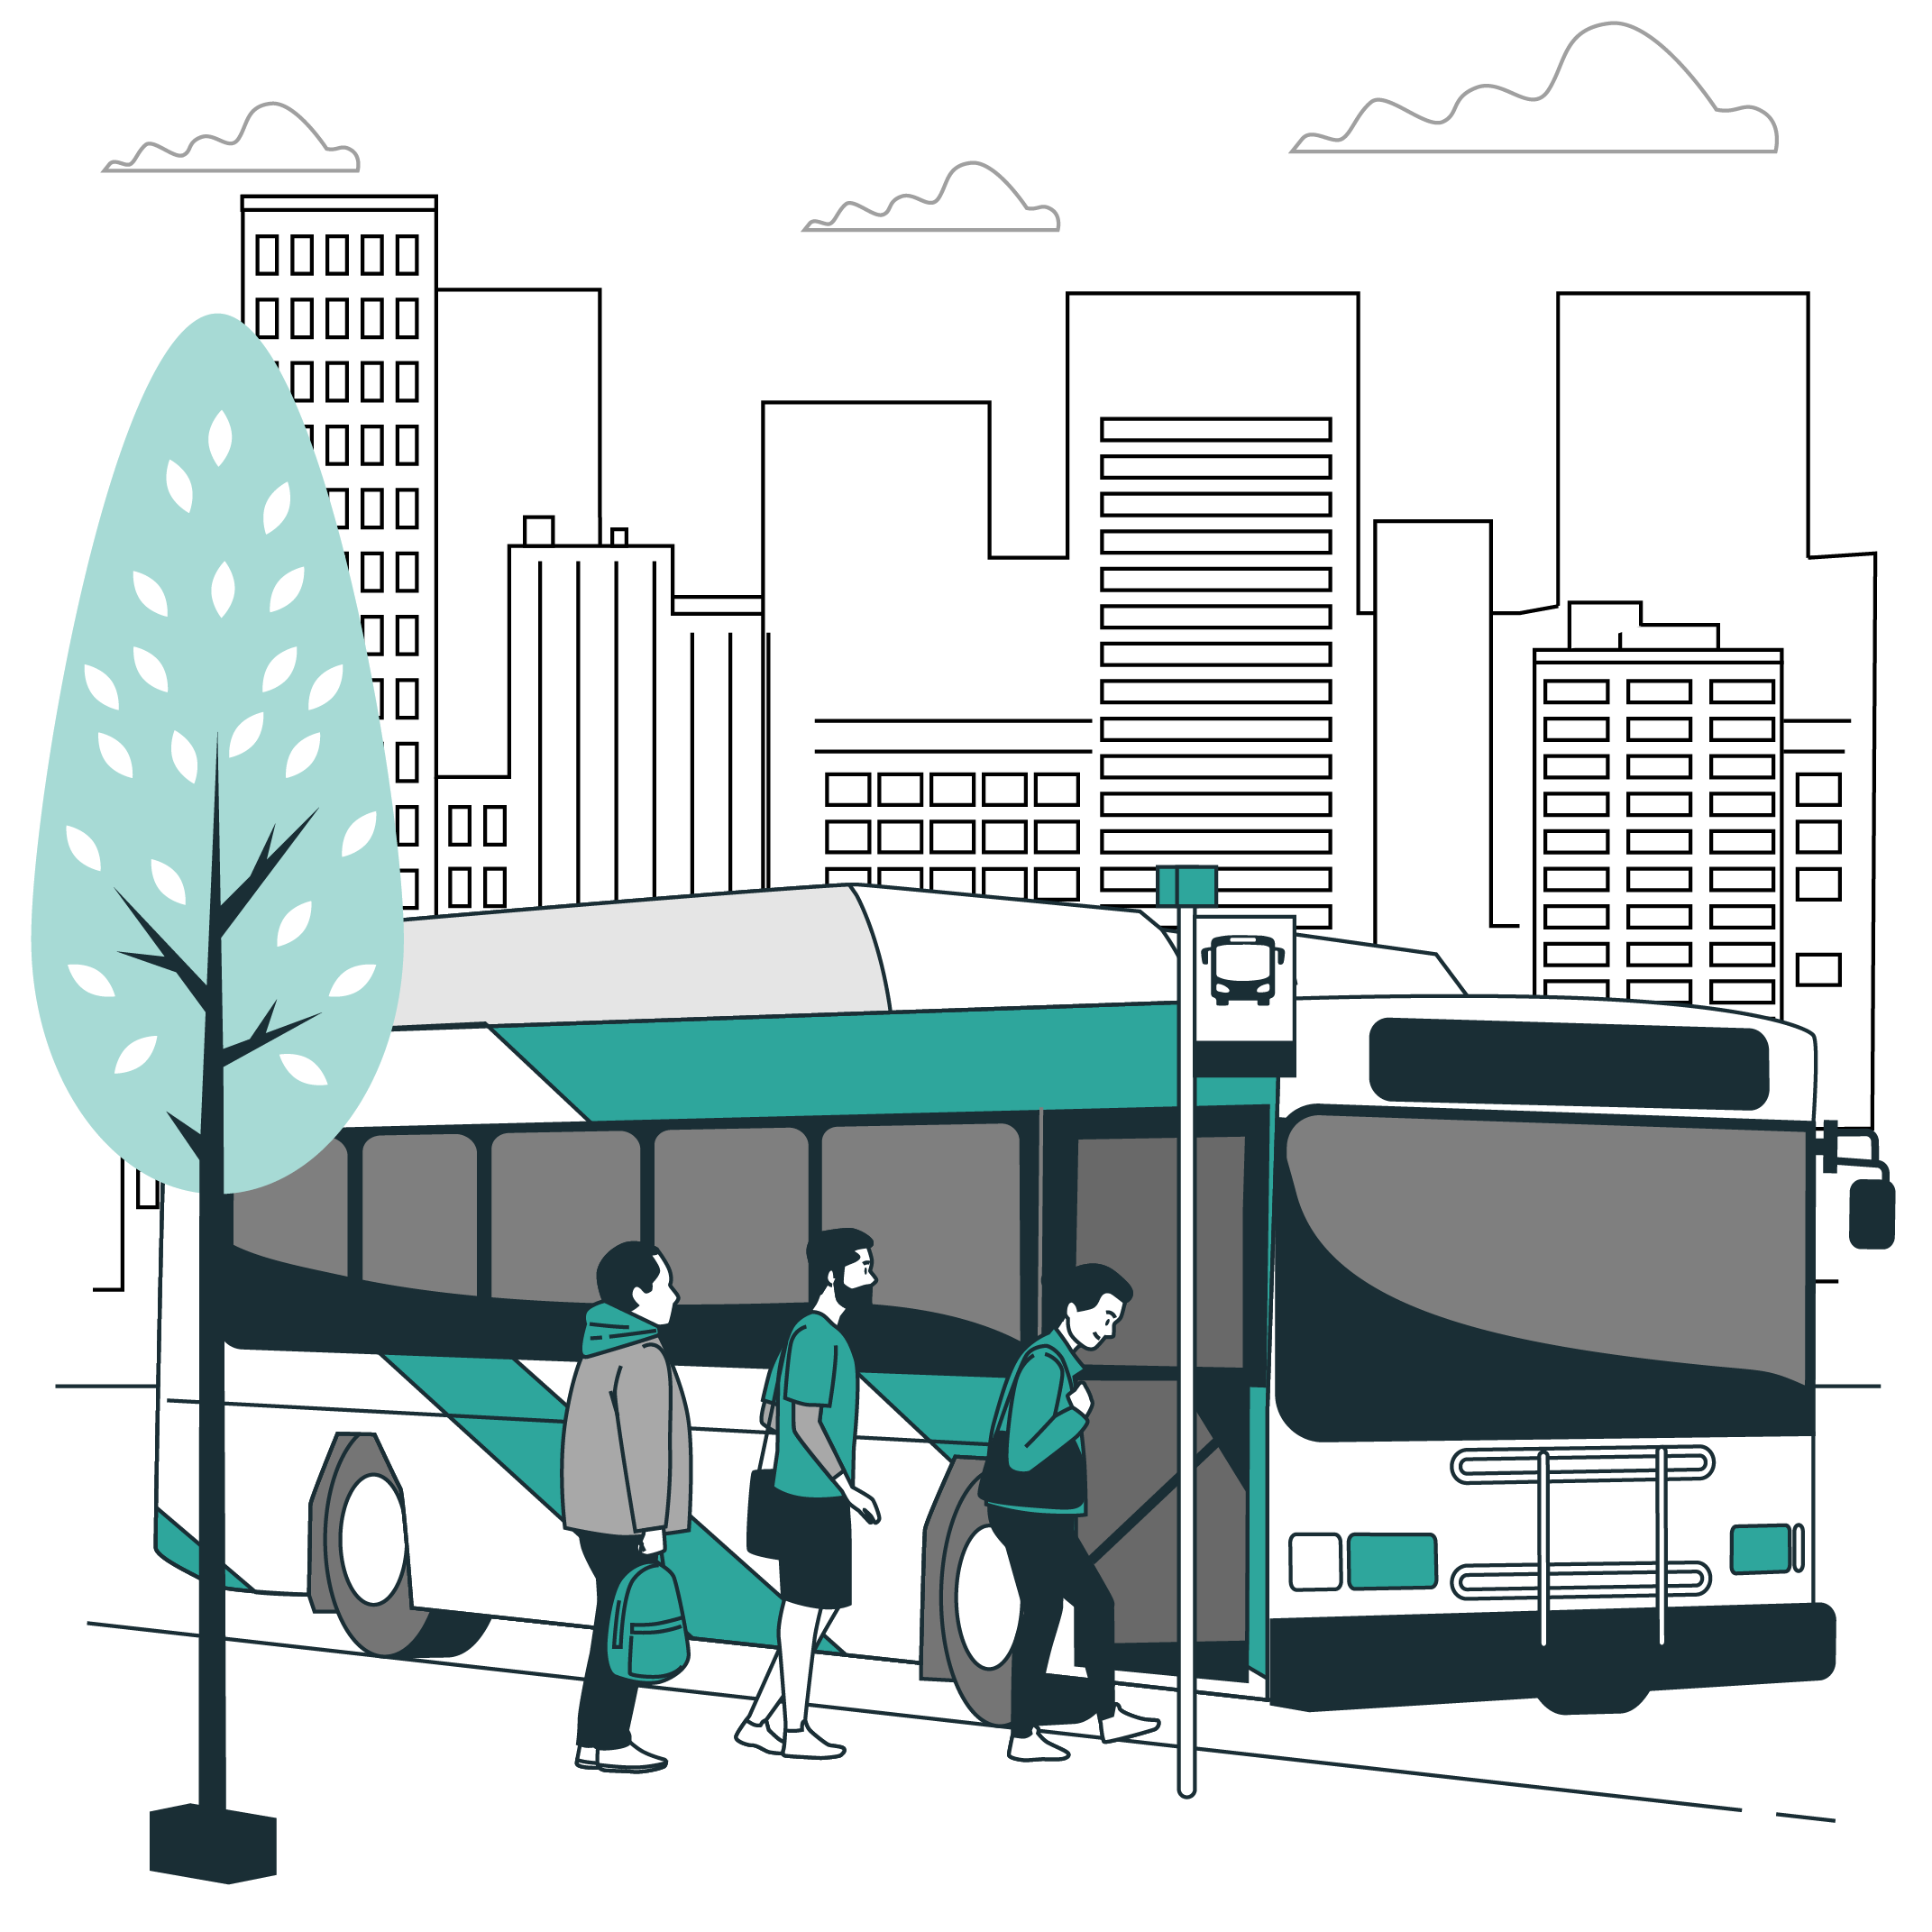 Bus Moebus illustration